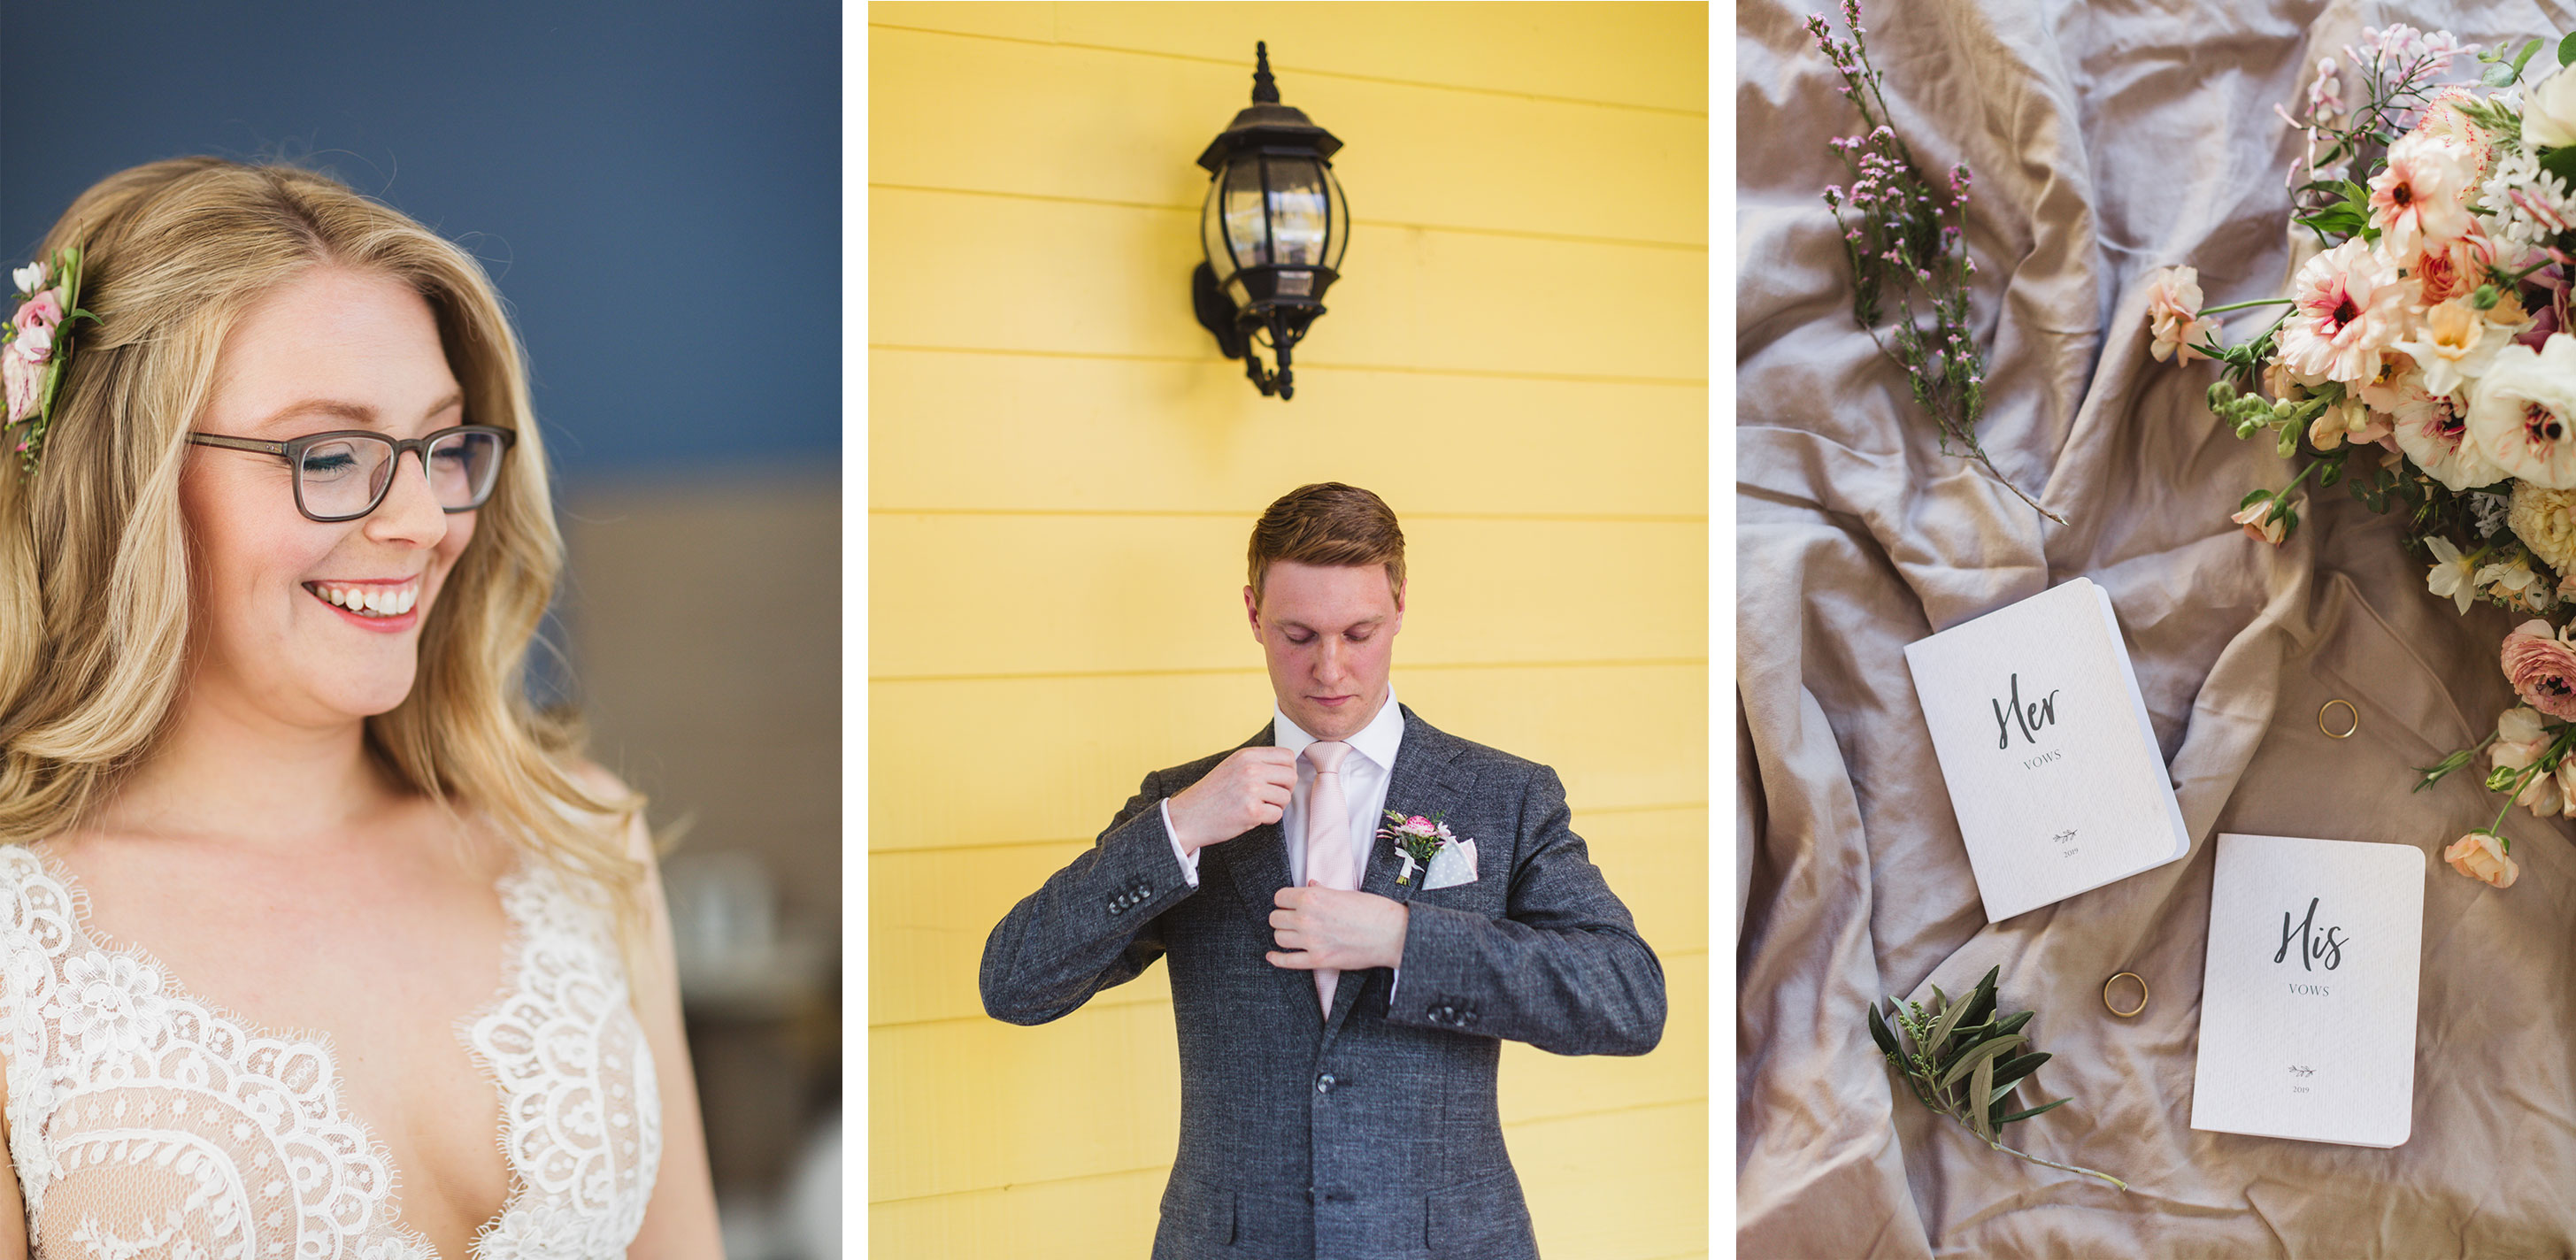 collage of wedding preparation images at california vineyard wedding vezer